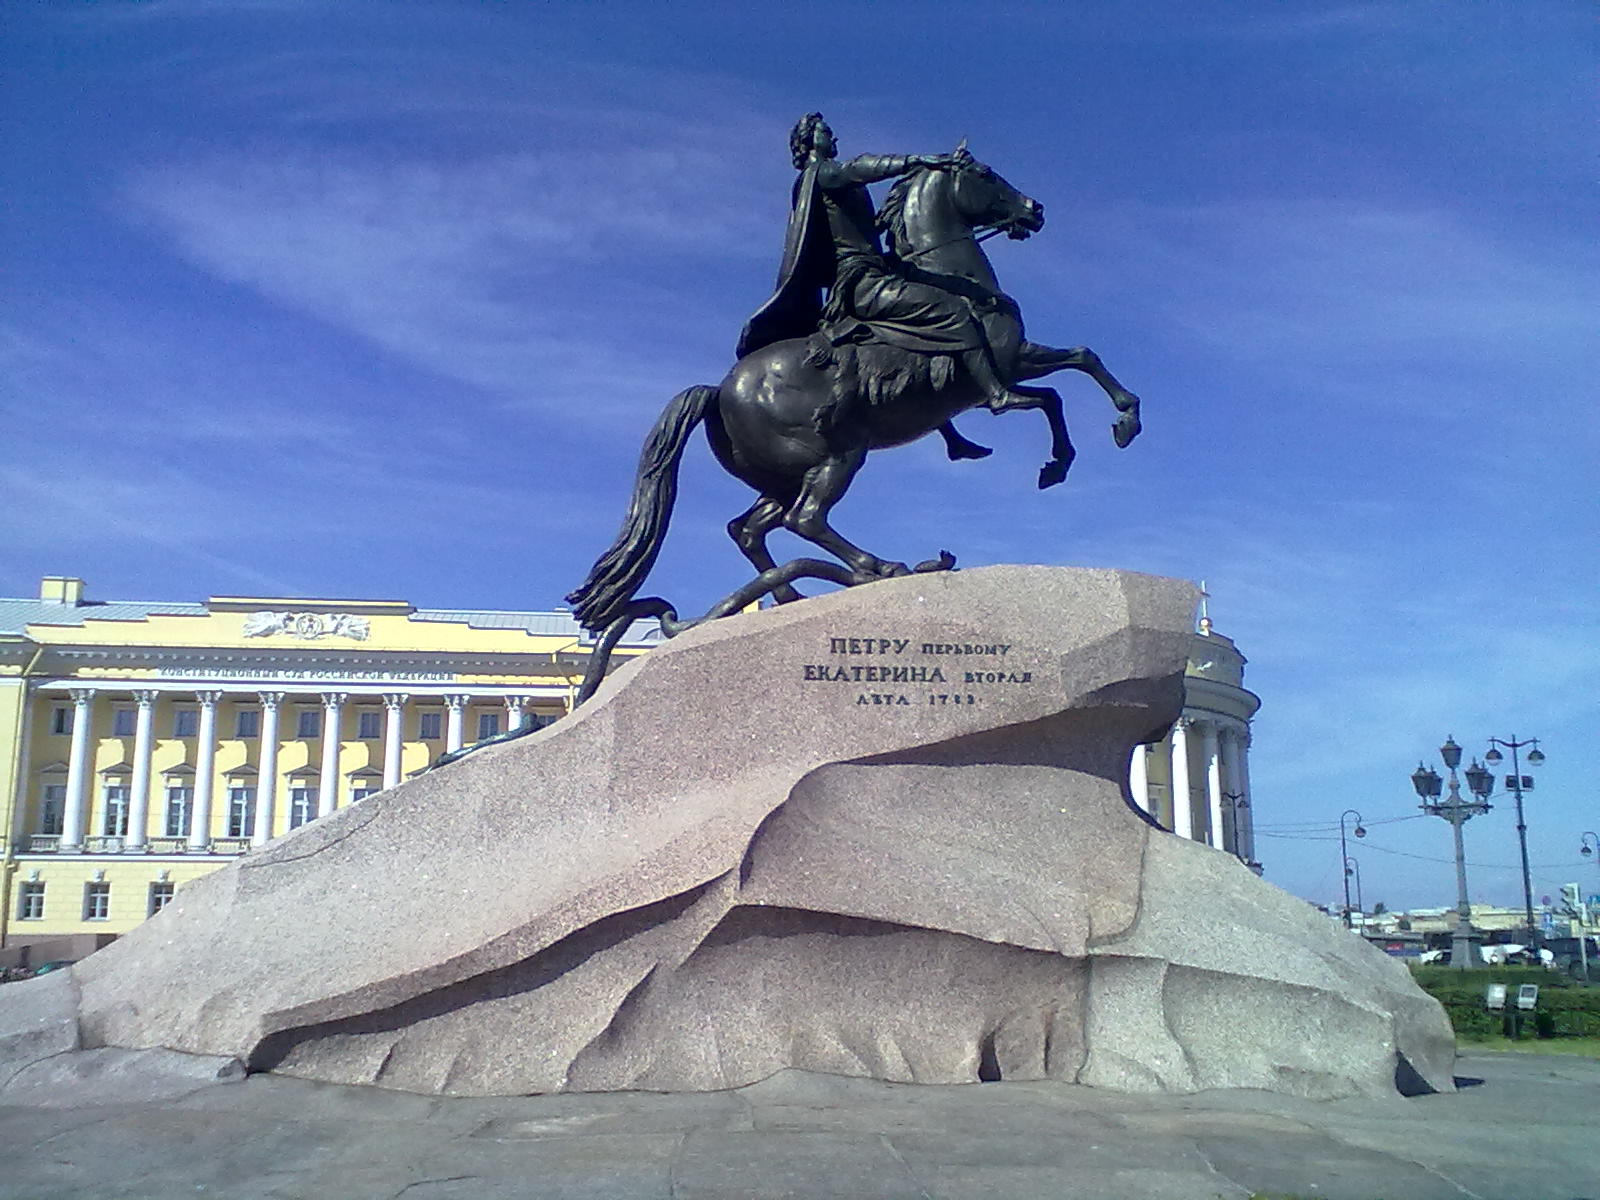 Туристический Санкт-Петербург: памятка для новичка